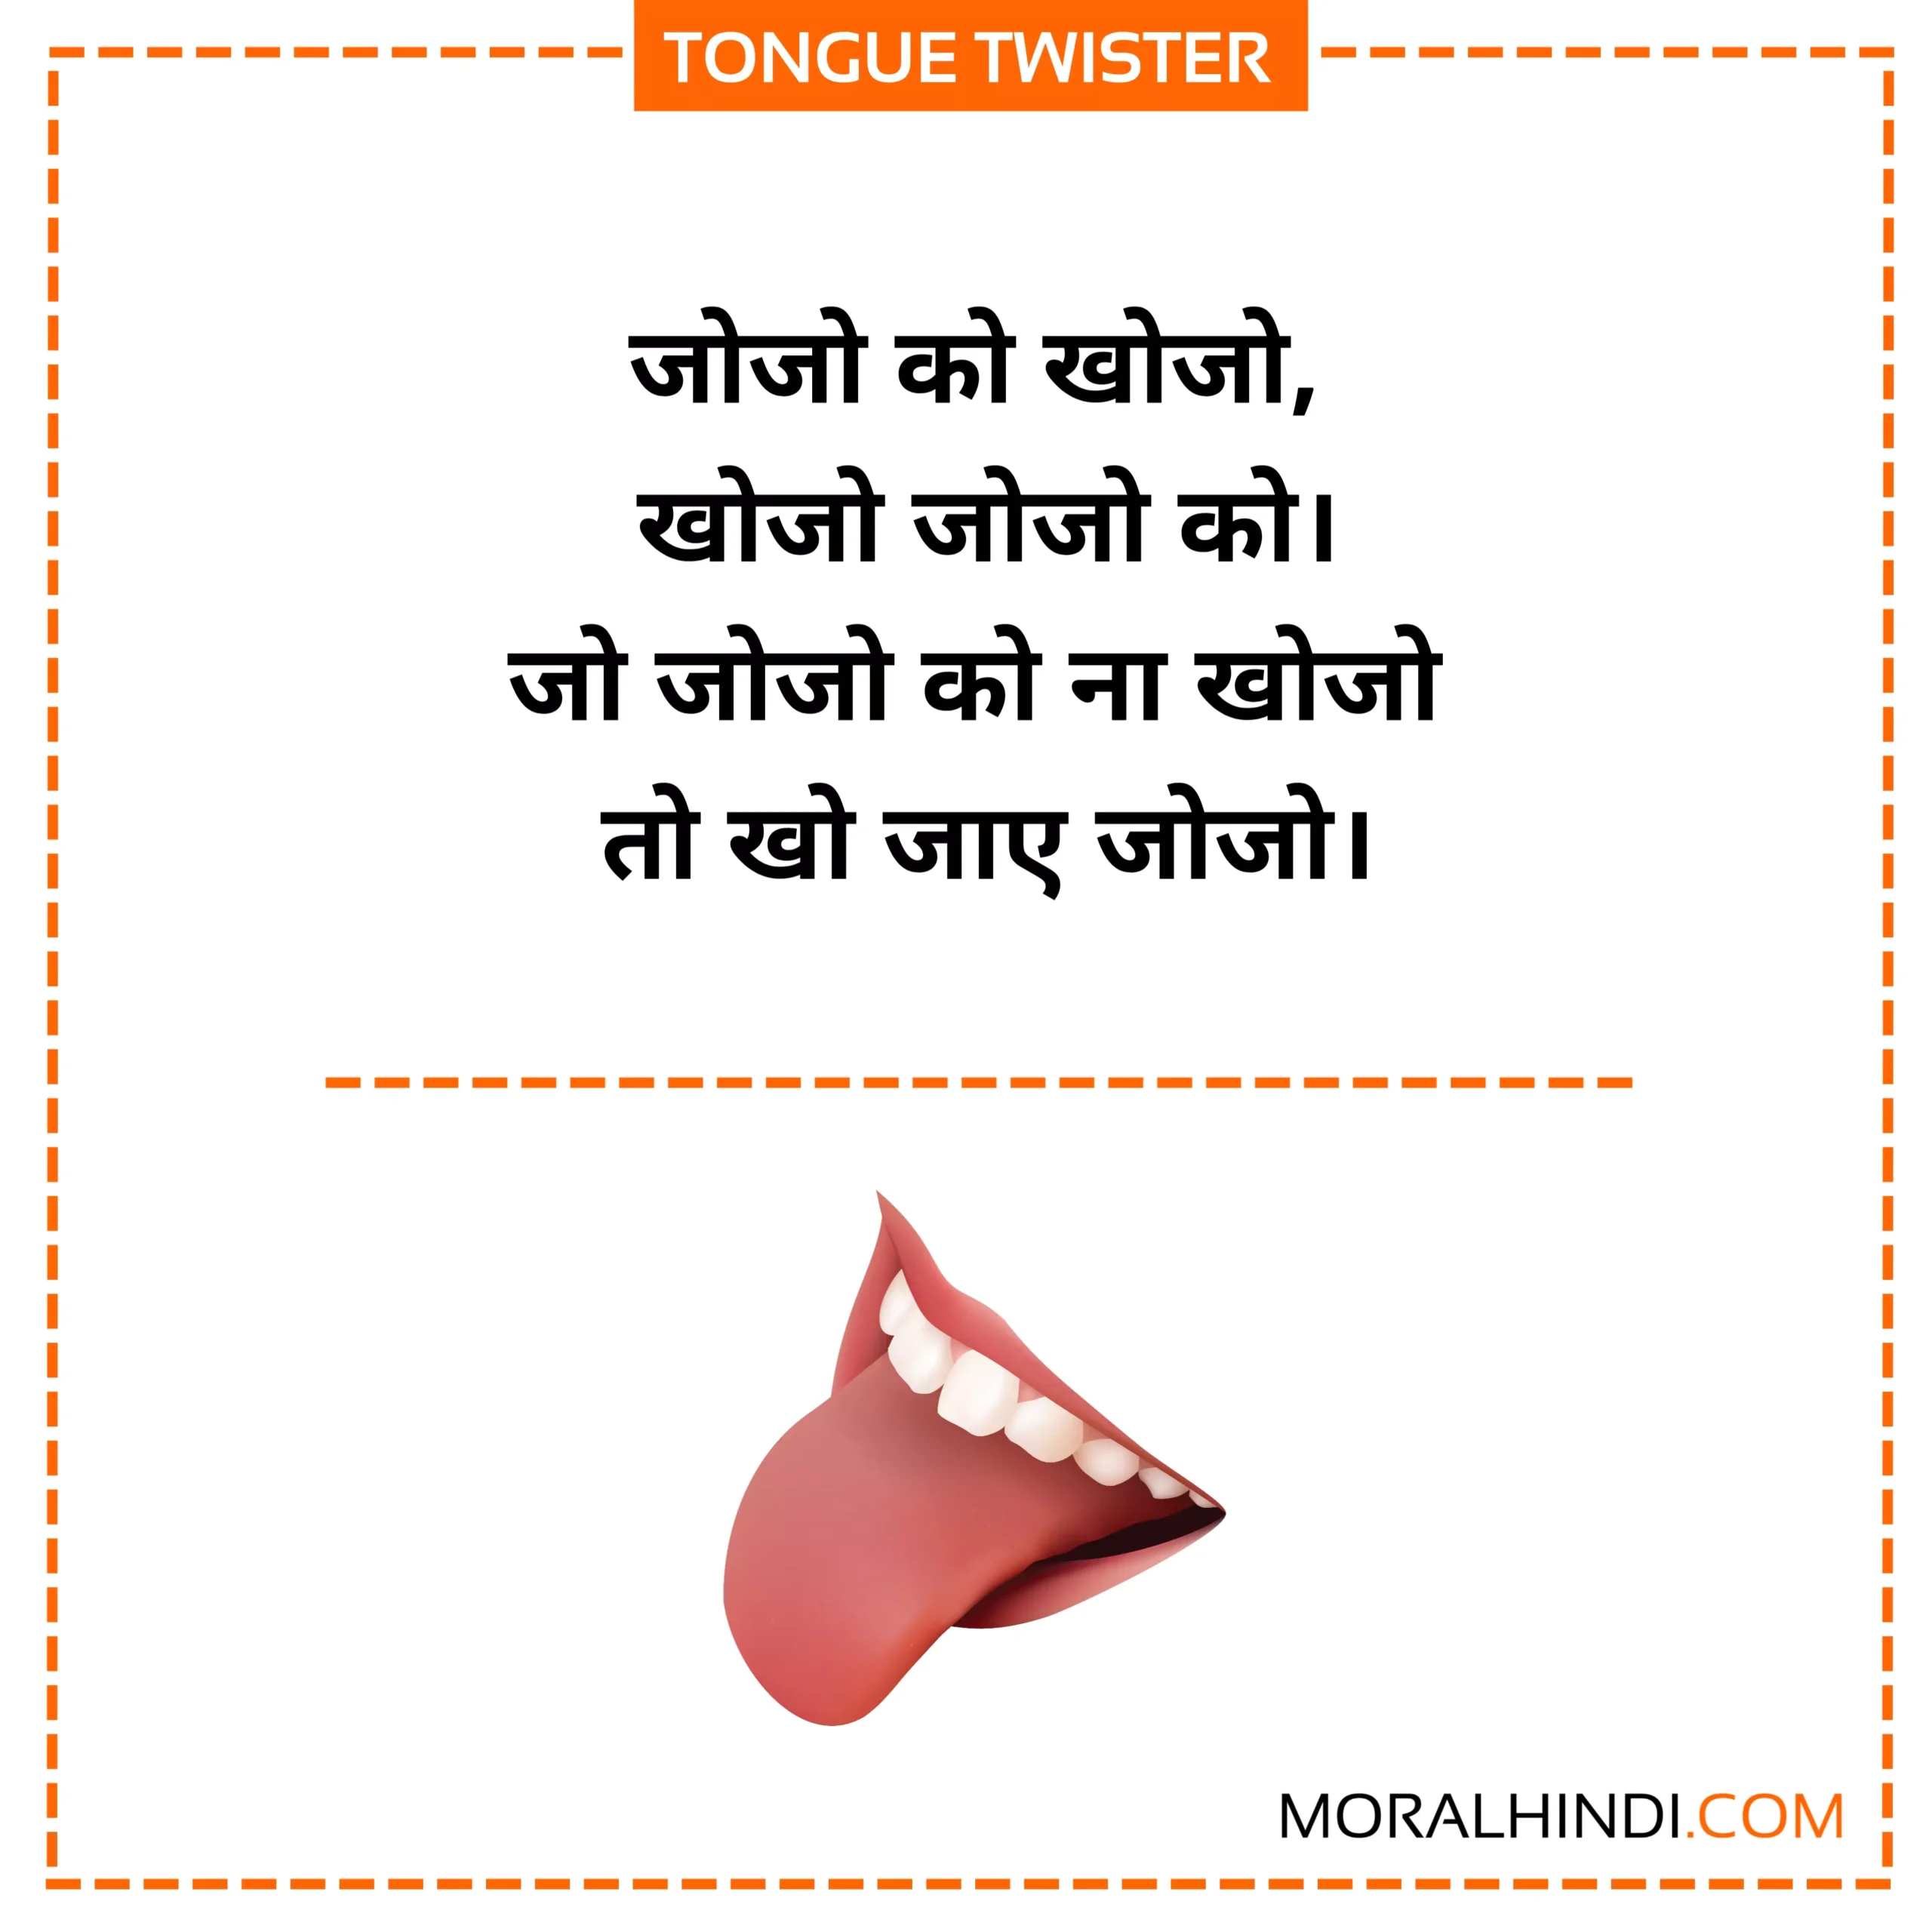 tongue twisters in hindi